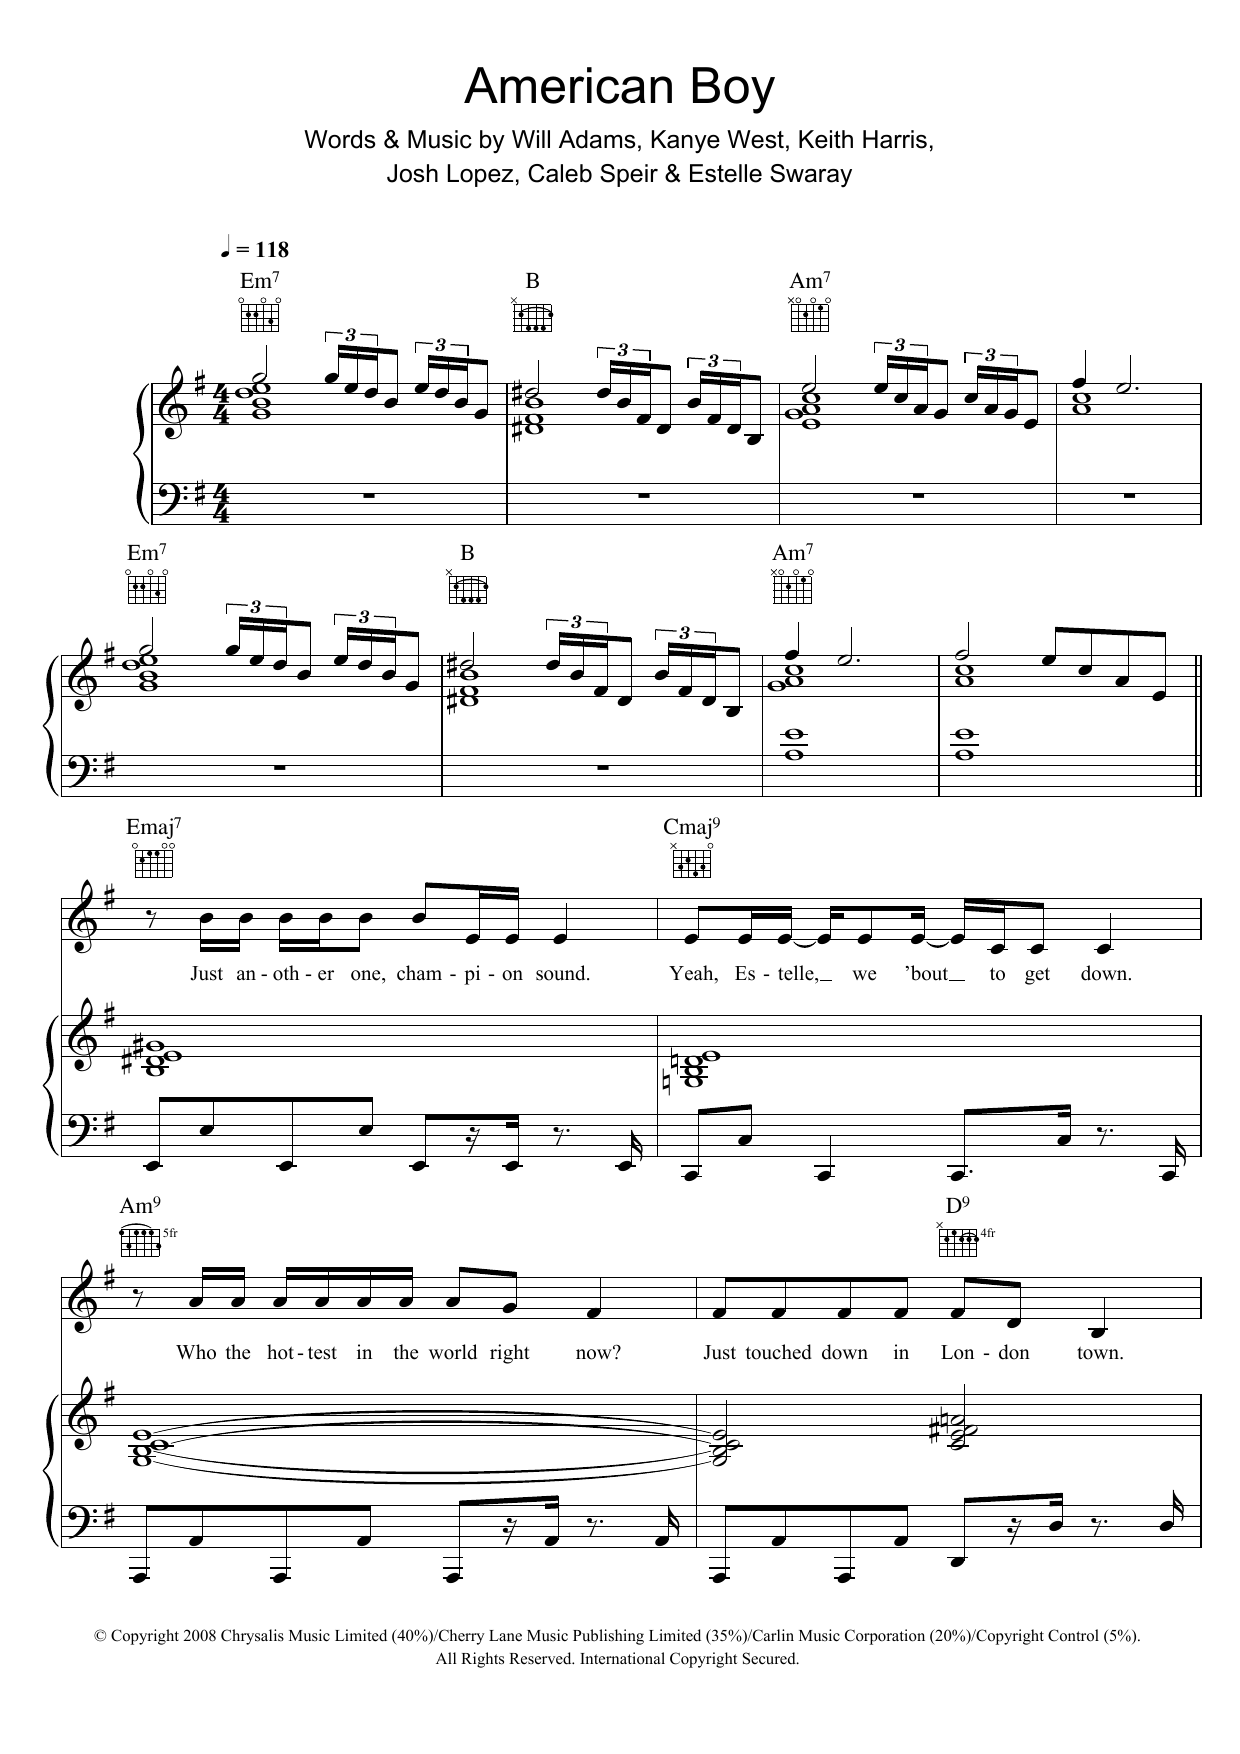 Estelle American Boy (featuring Kanye West) Sheet Music Notes & Chords for Guitar Chords/Lyrics - Download or Print PDF